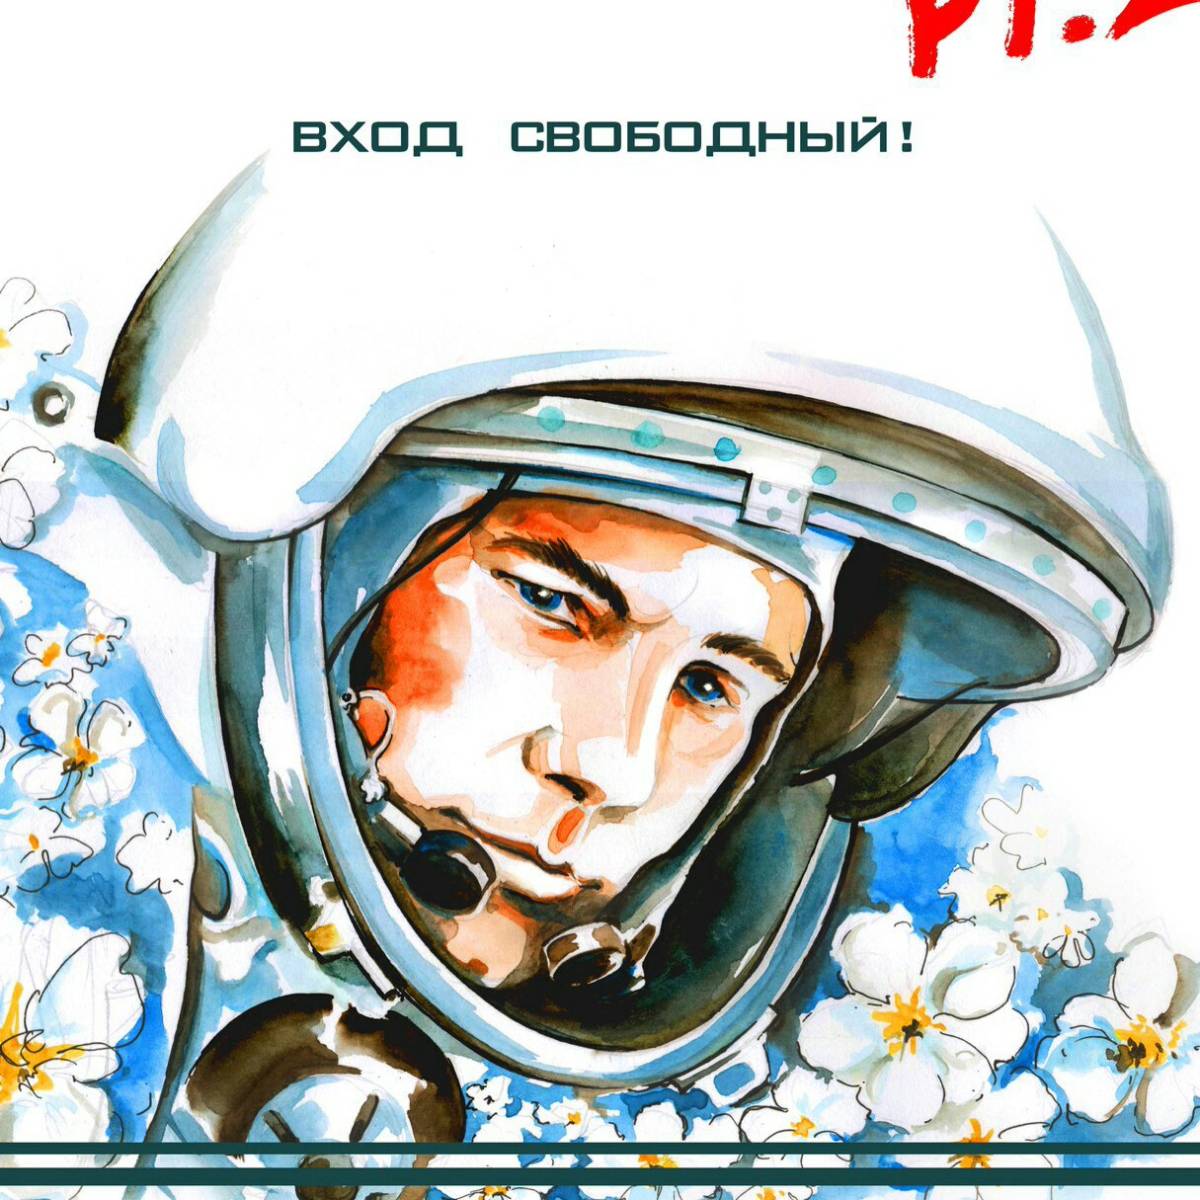 Гагарин картинки день космонавтики. Гагарин космонавт. Звездный сын земли Гагарин.